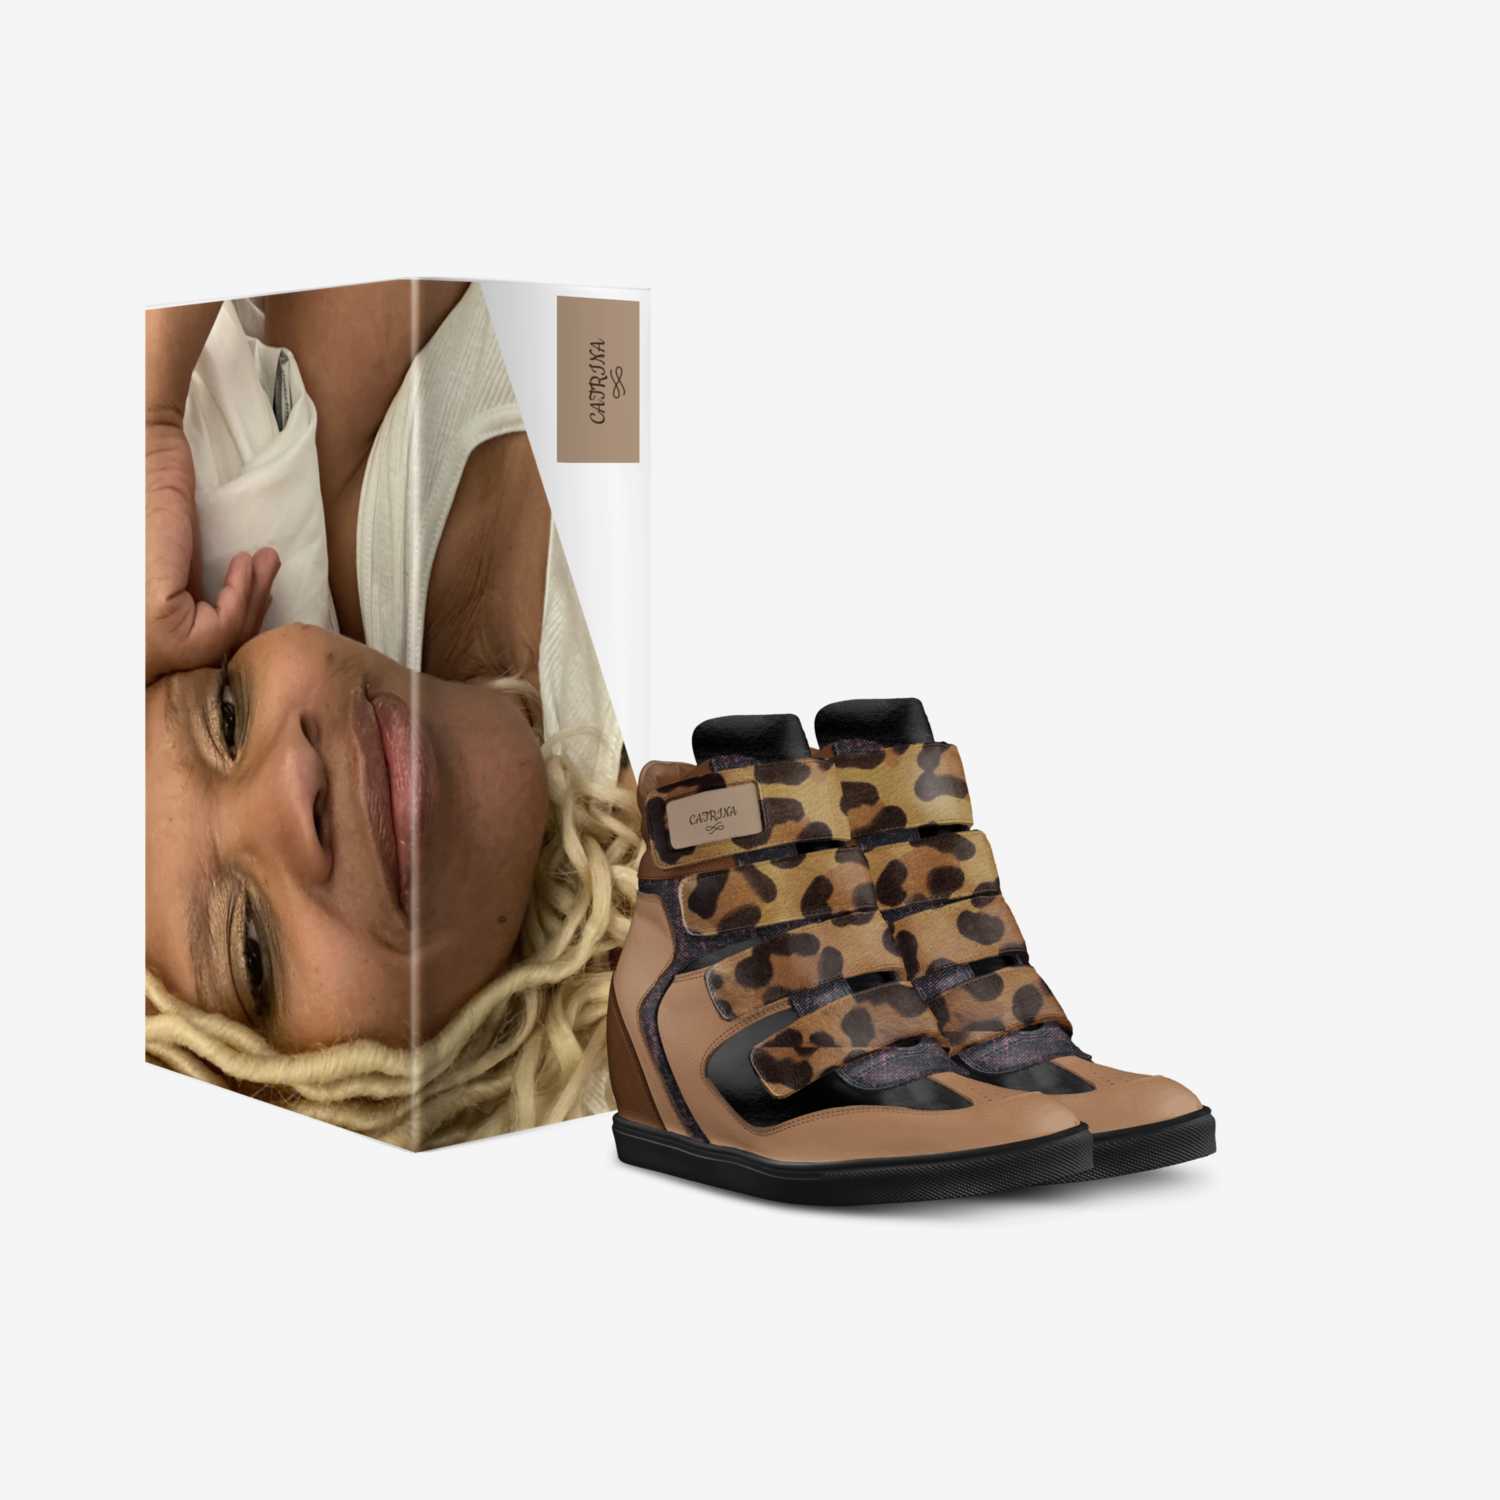 CATRINA custom made in Italy shoes by Catrina Brown | Box view